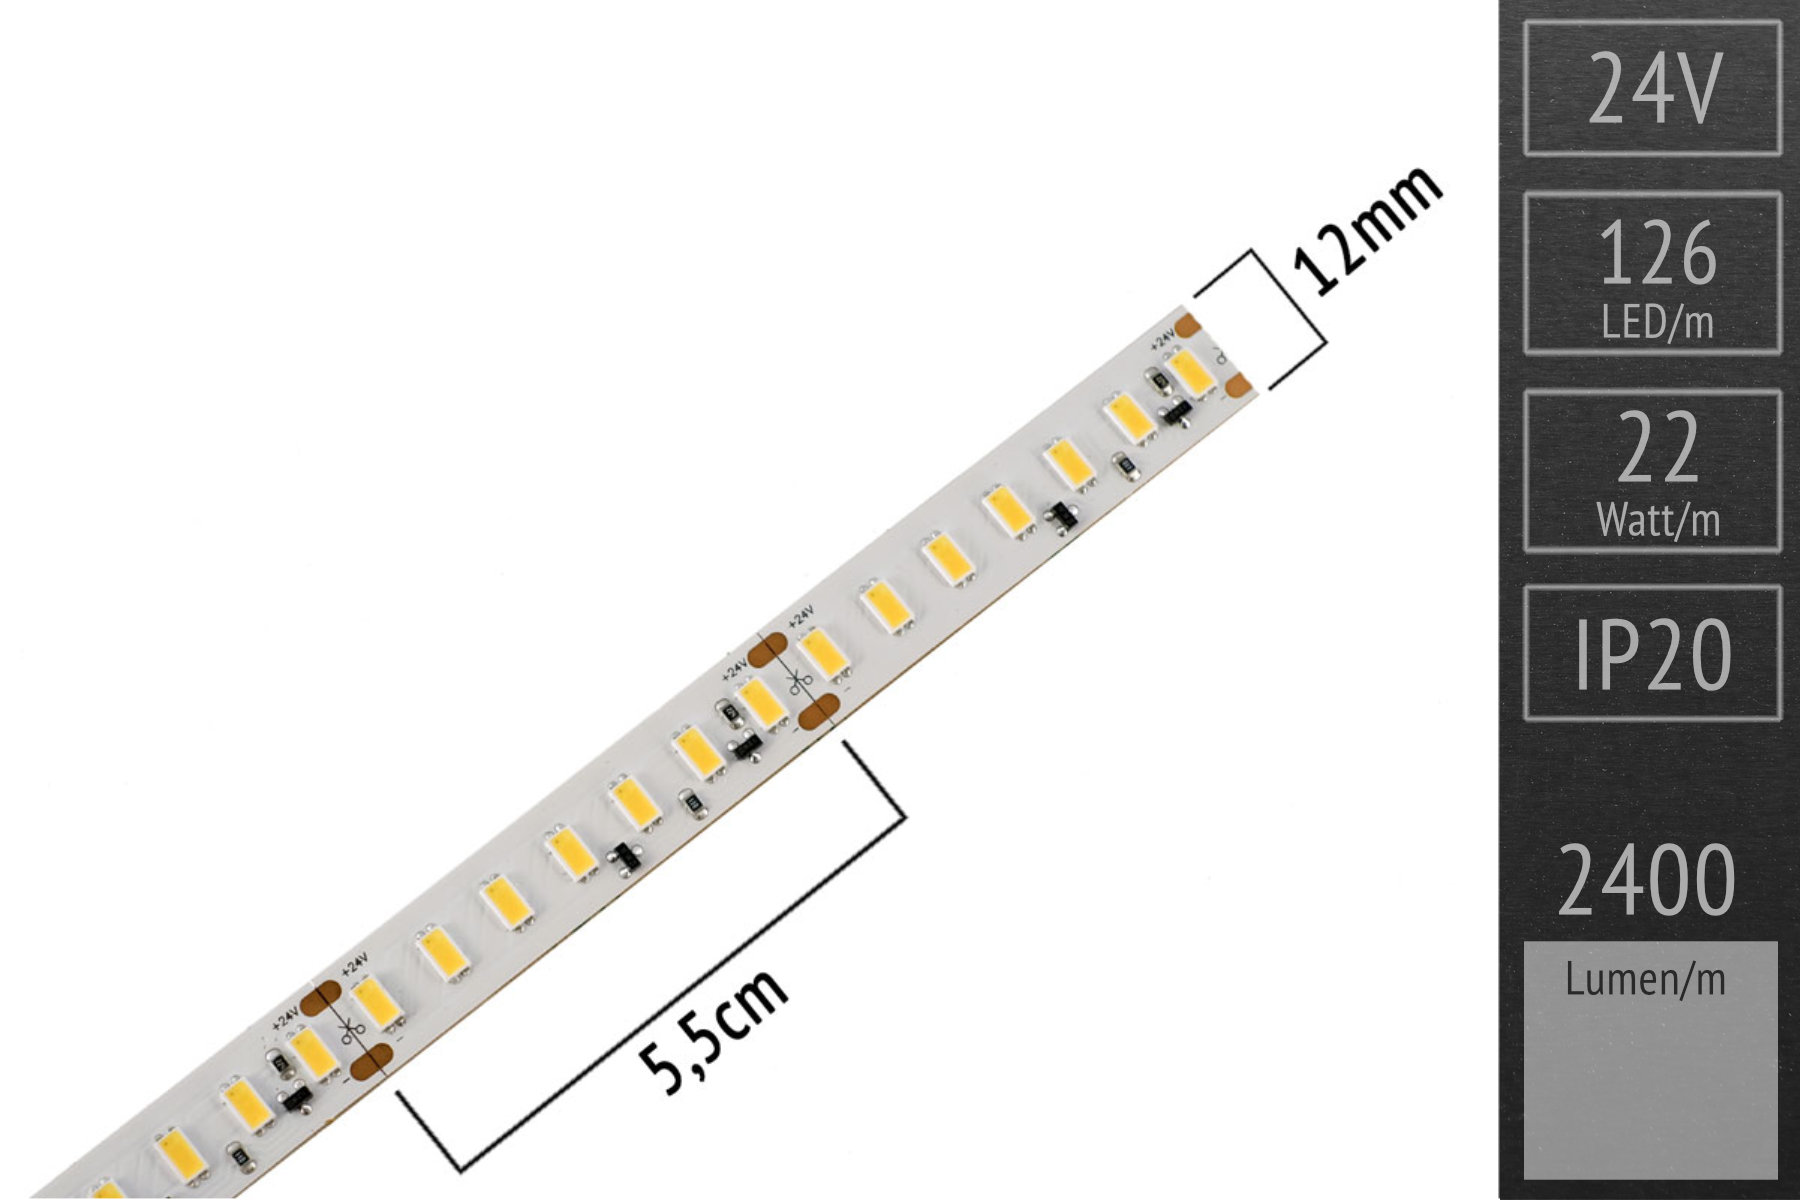 Highest colour quality with CRI>95: LED strip 5630 - 126 LED/m - 2,400 lm/m - 3.000K warm white - IP20 5m roll